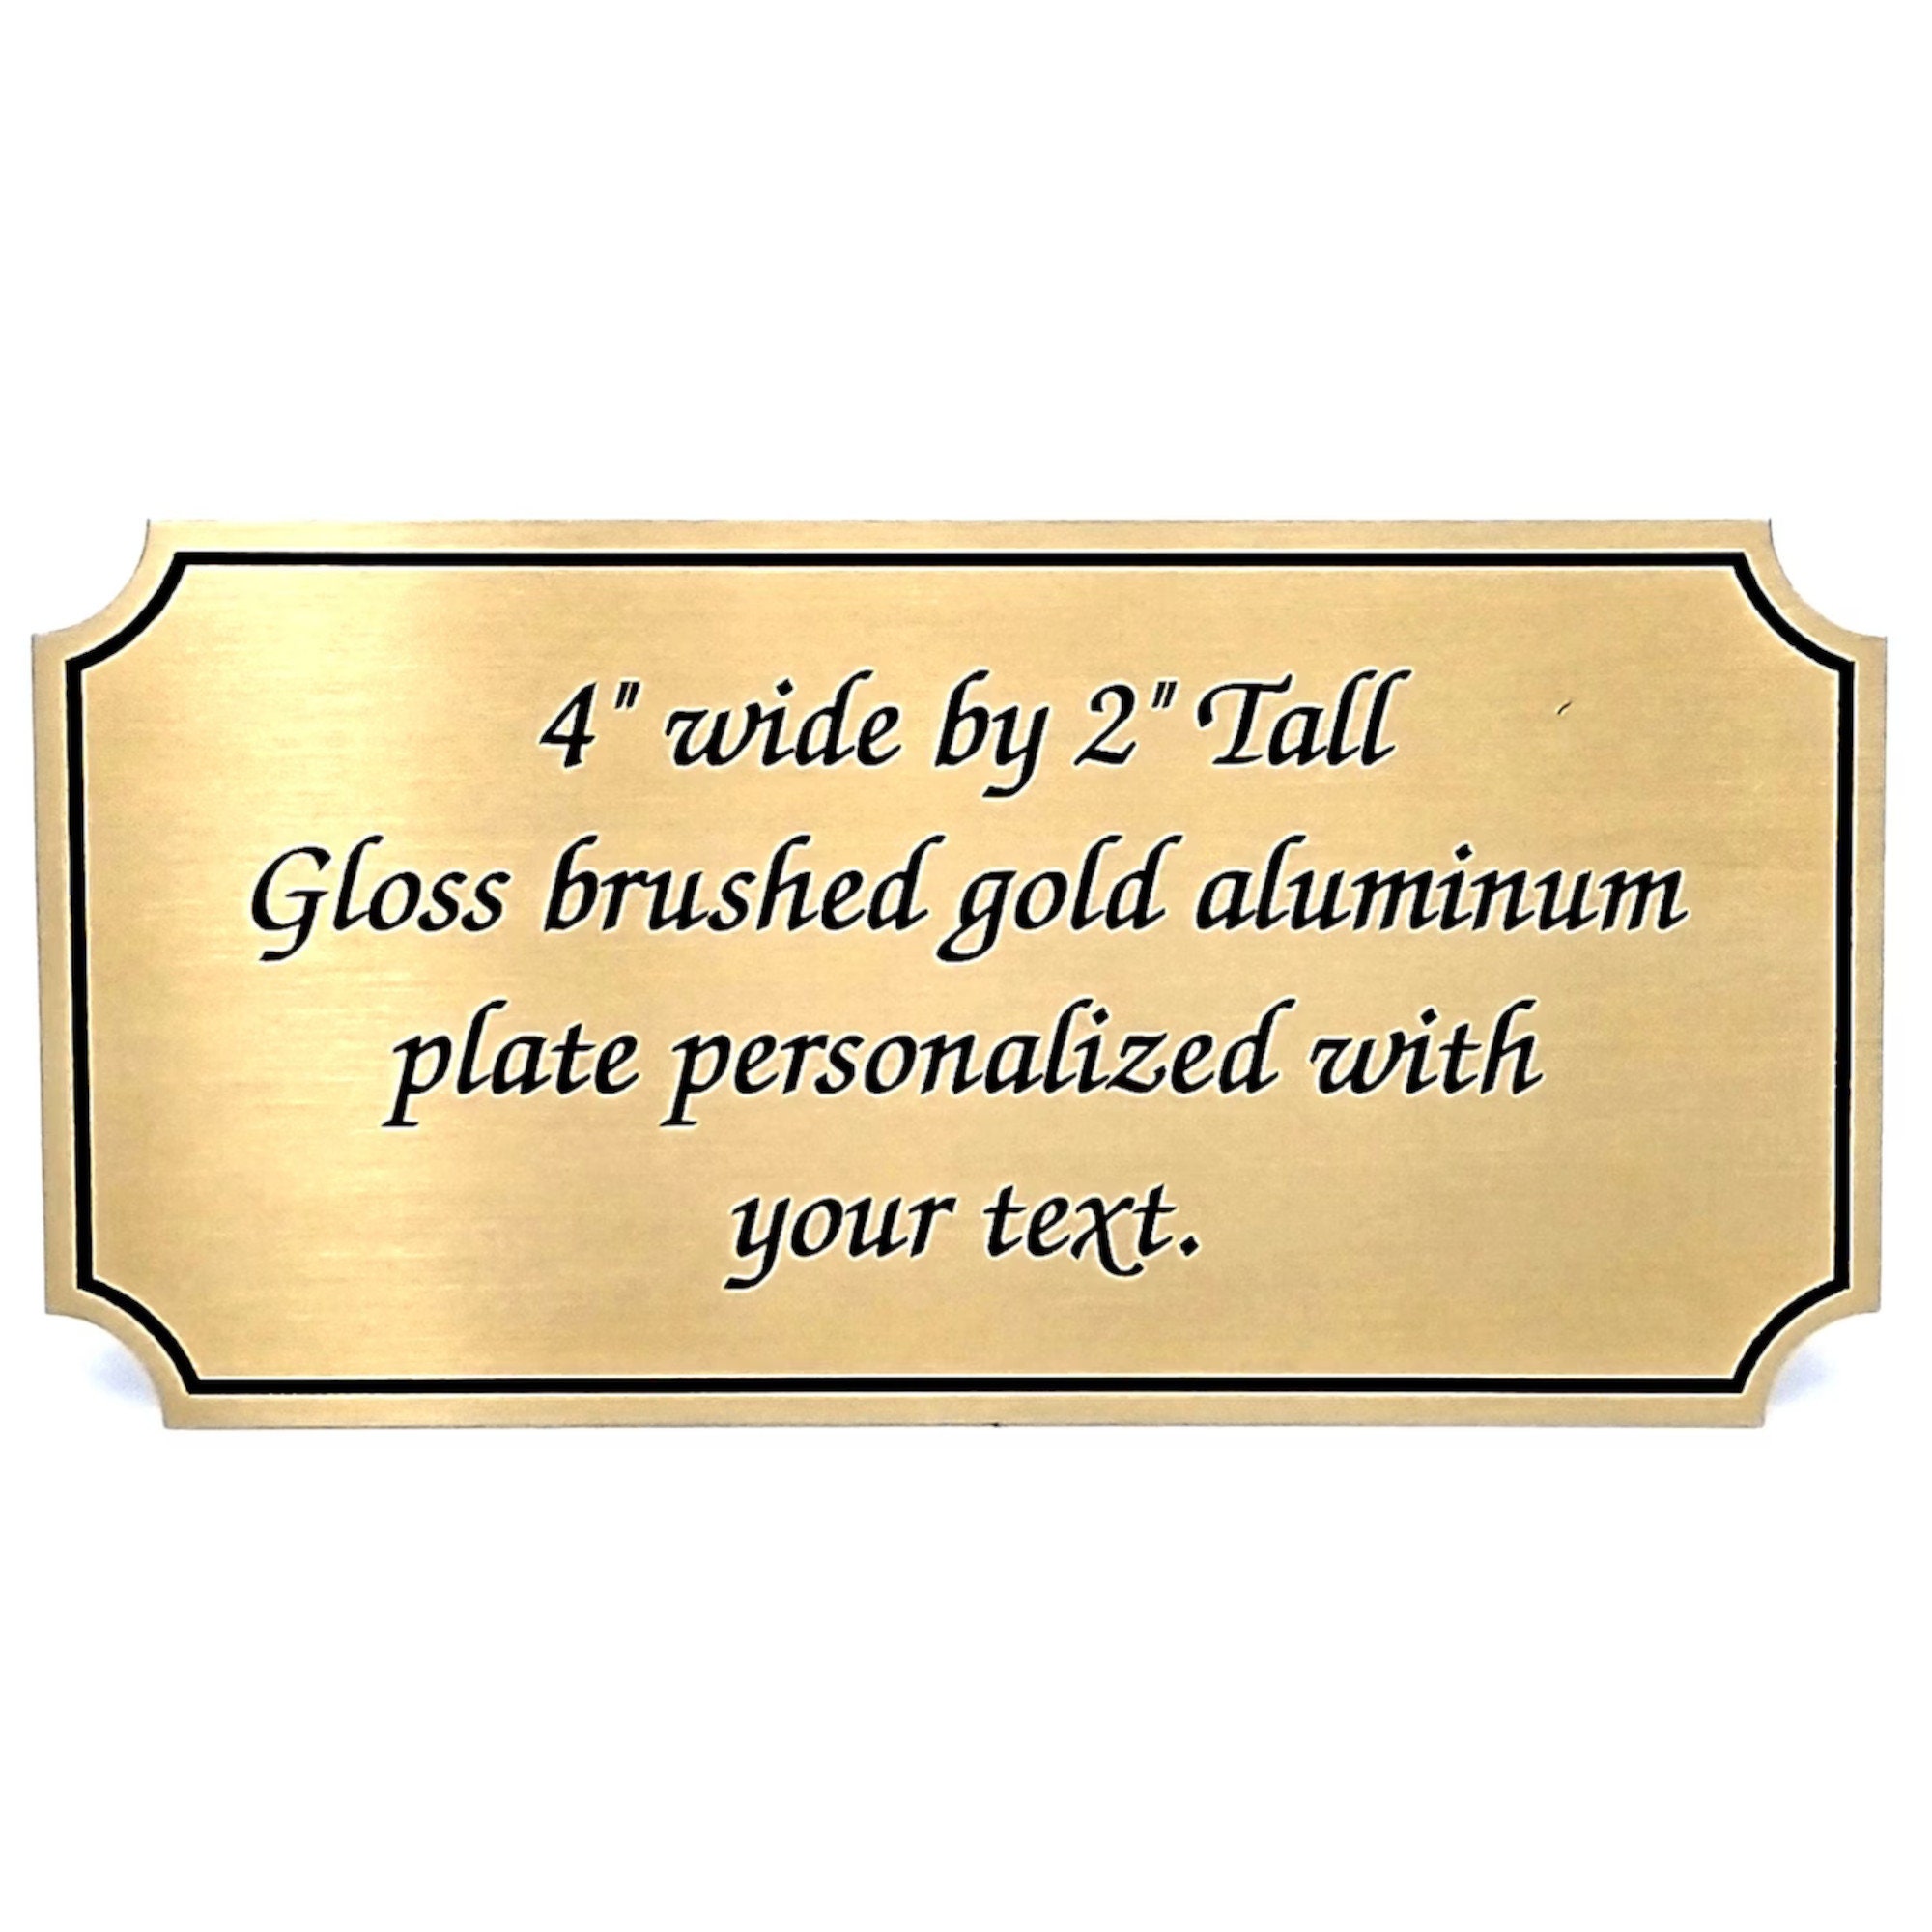 Engraved Brushed Gold Aluminum Plate